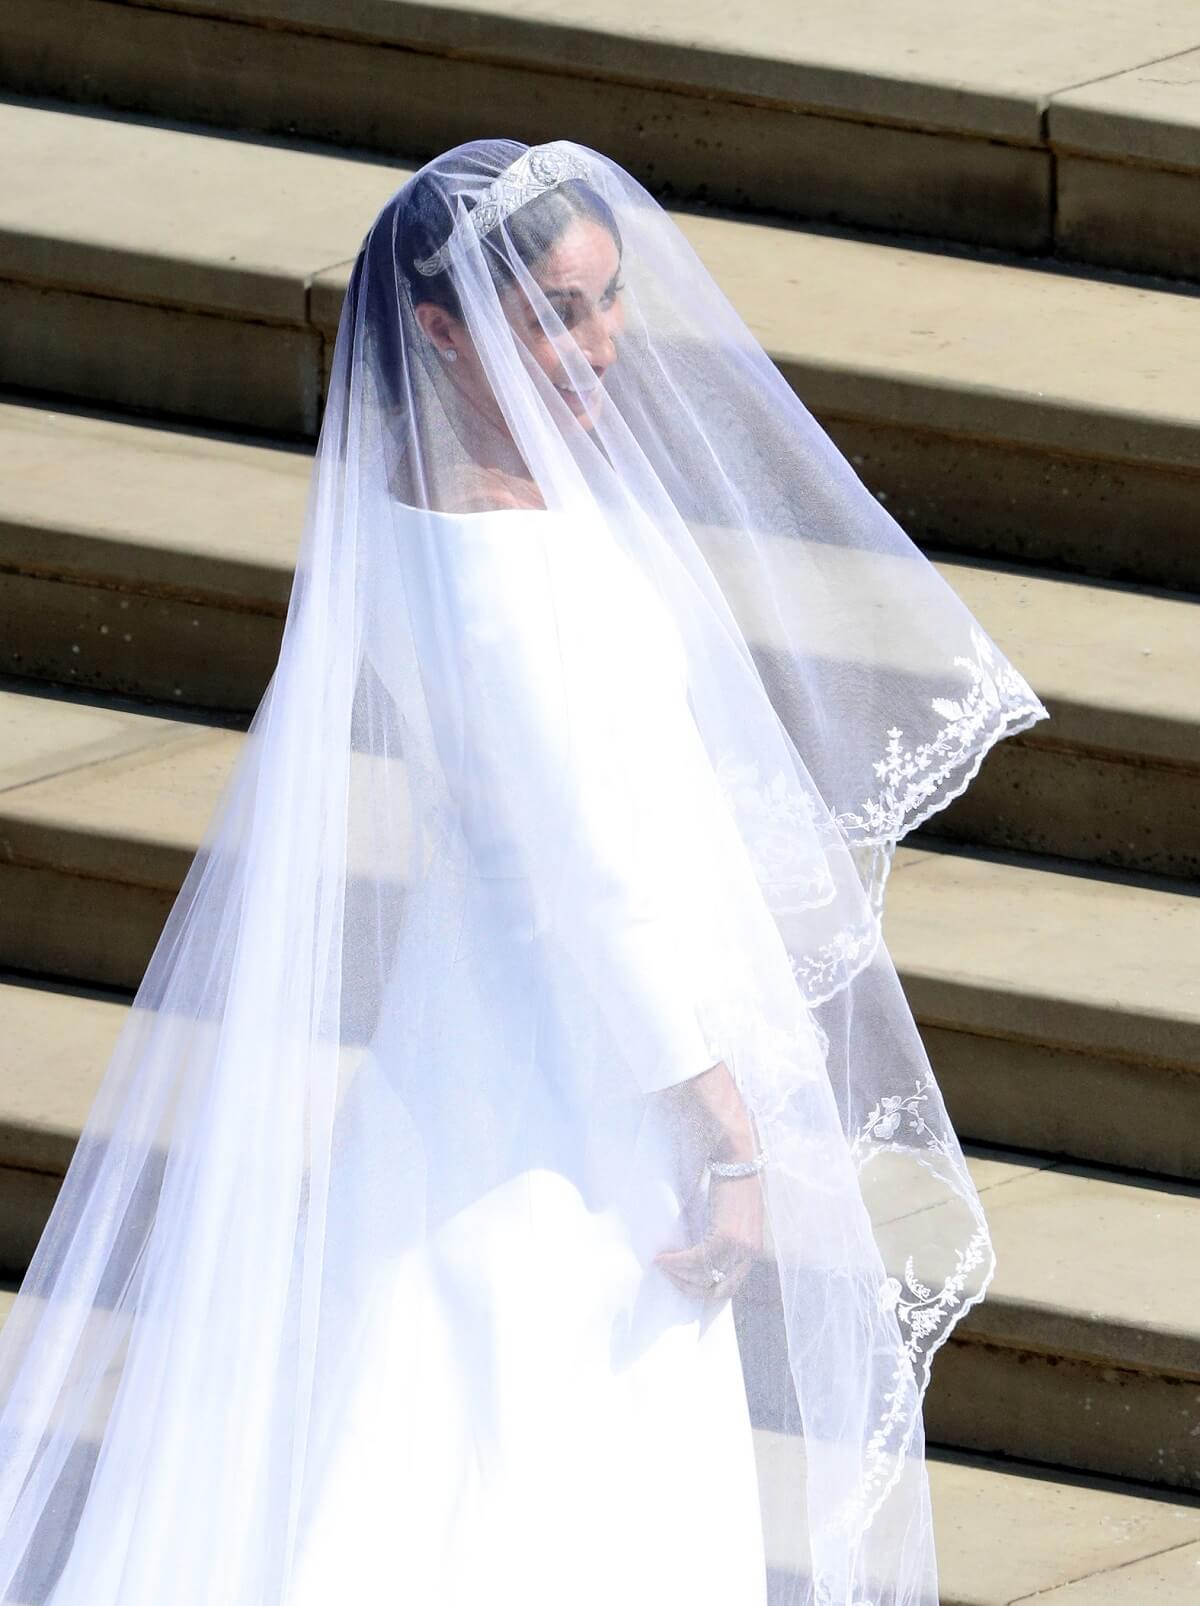 Meghan Markle arrives for her wedding to Prince Harry at St George's Chapel, Windsor Castle